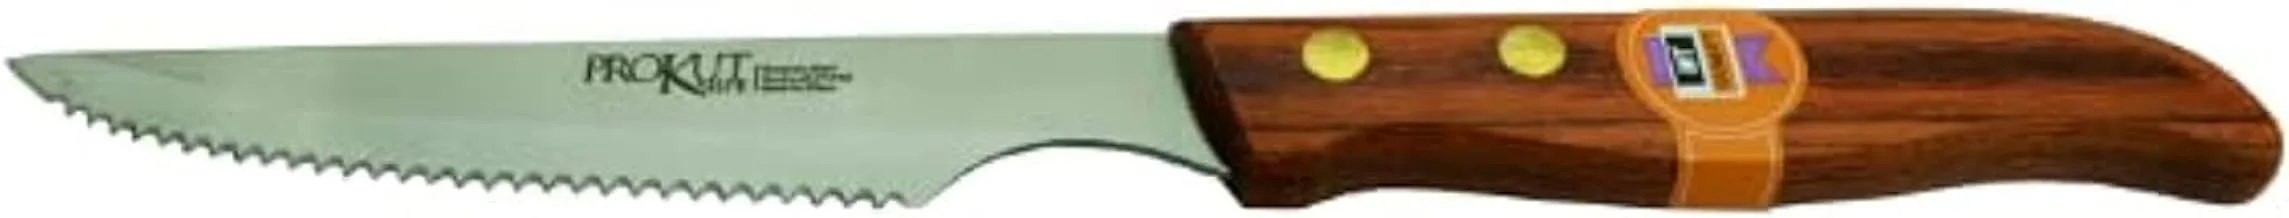 Prokut Steak Knife, 4-Inch Size